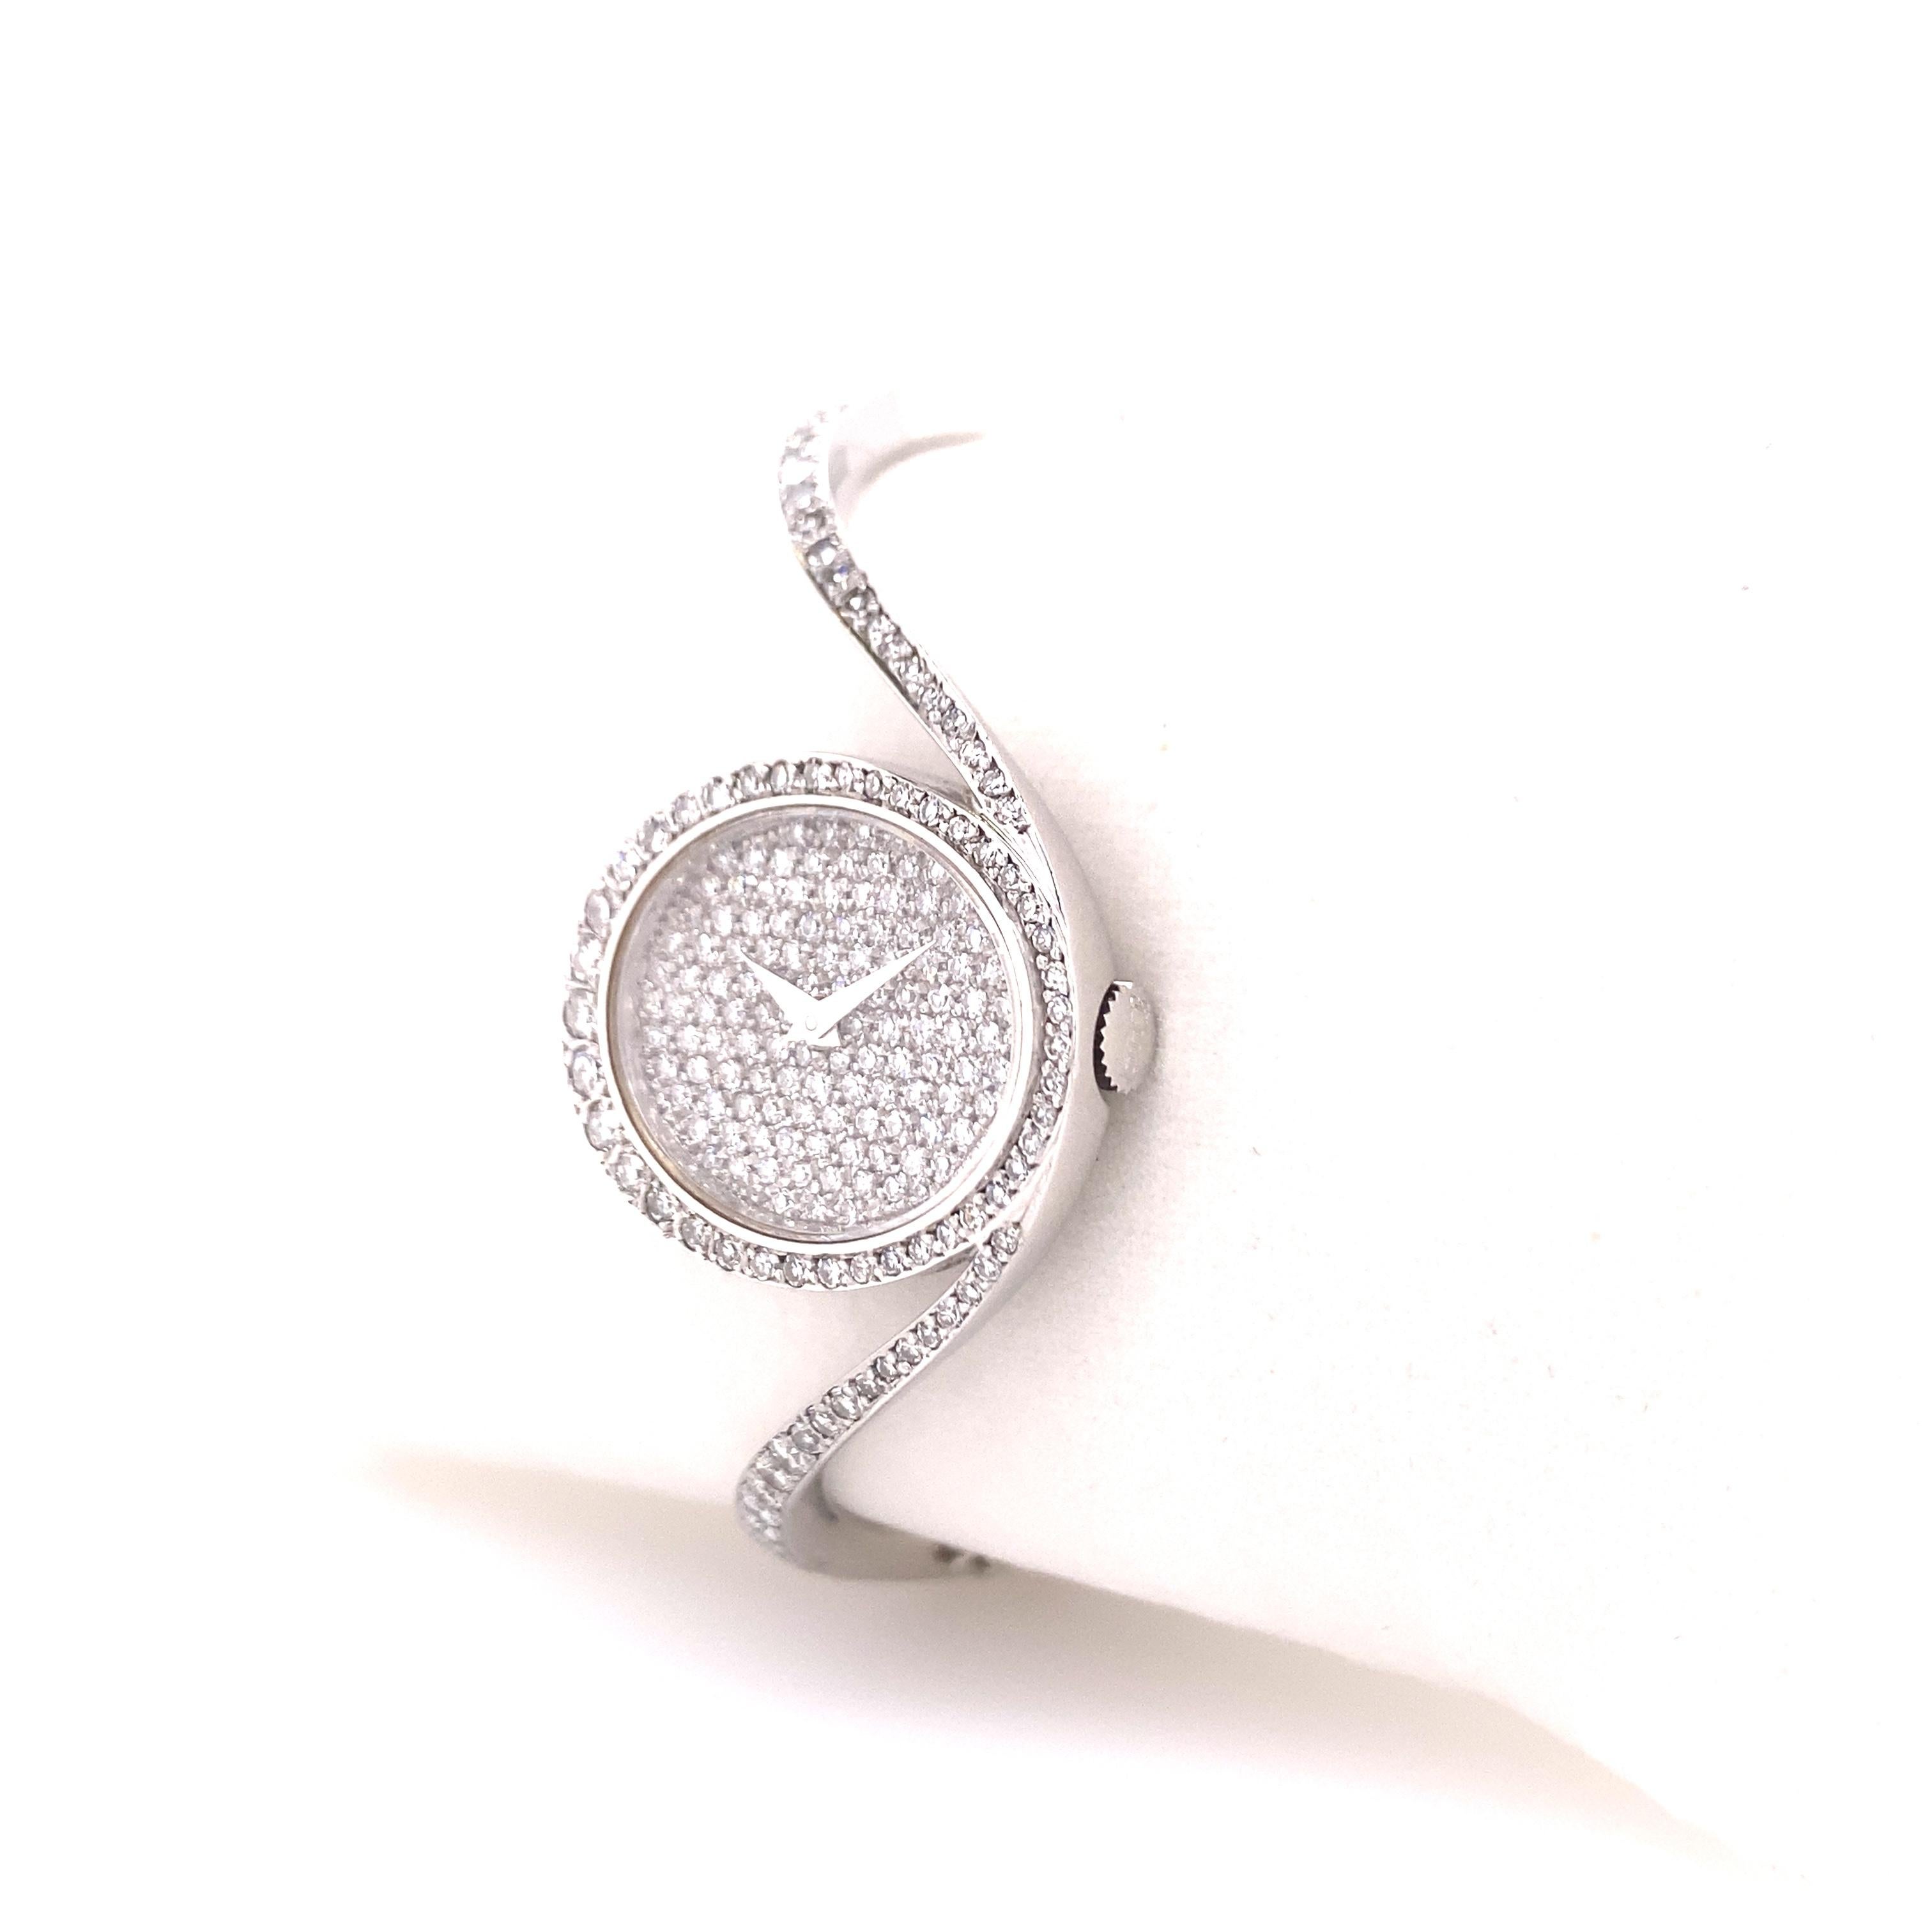 Modern Unique Chopard Diamond Bangle Watch in White Gold 18k